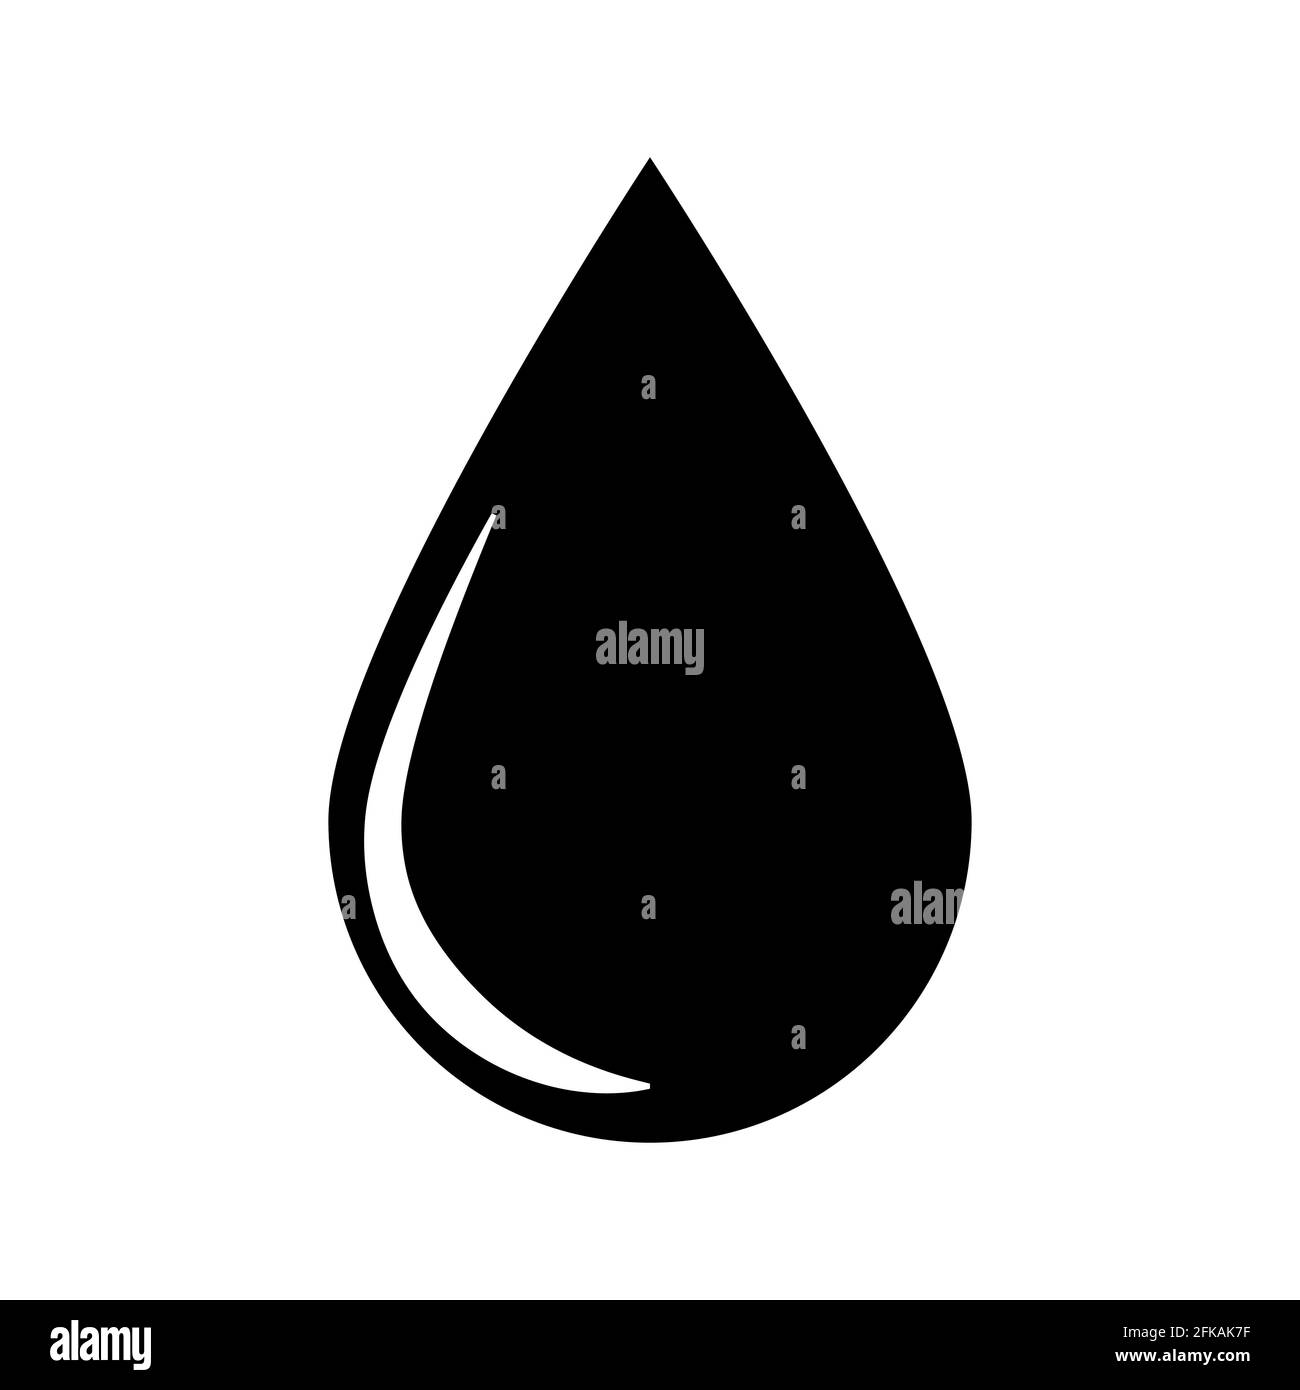 Vector black water drop icon. Design for logo, symbol, sign or design element Stock Vector